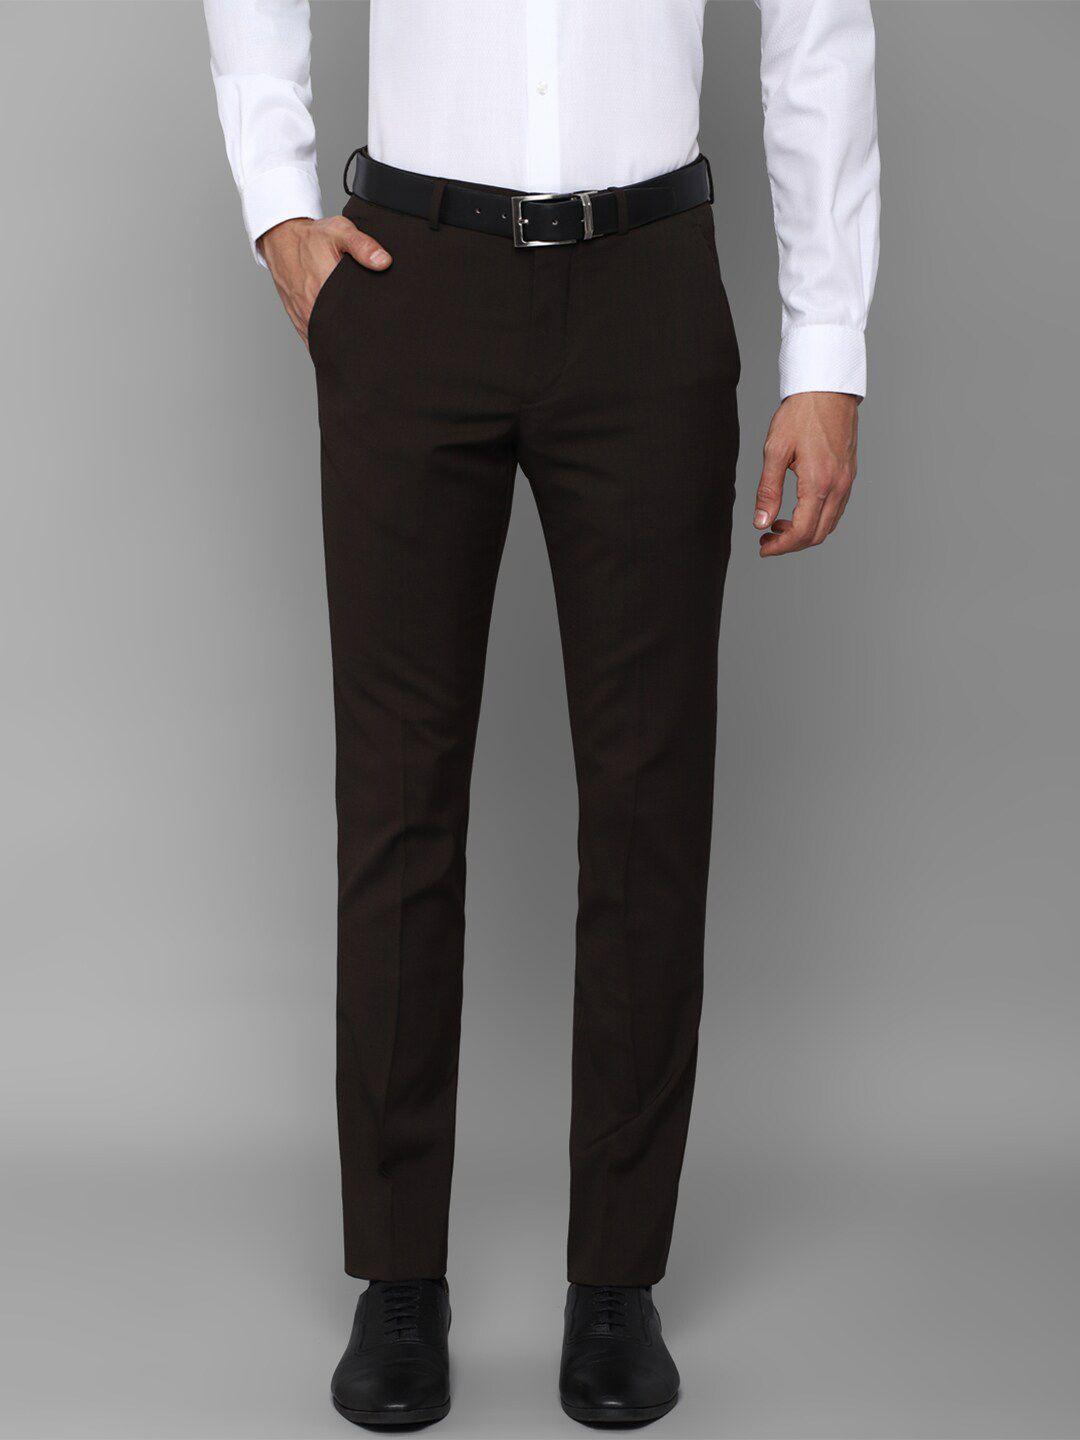 louis-philippe-men-brown-slim-fit-trousers